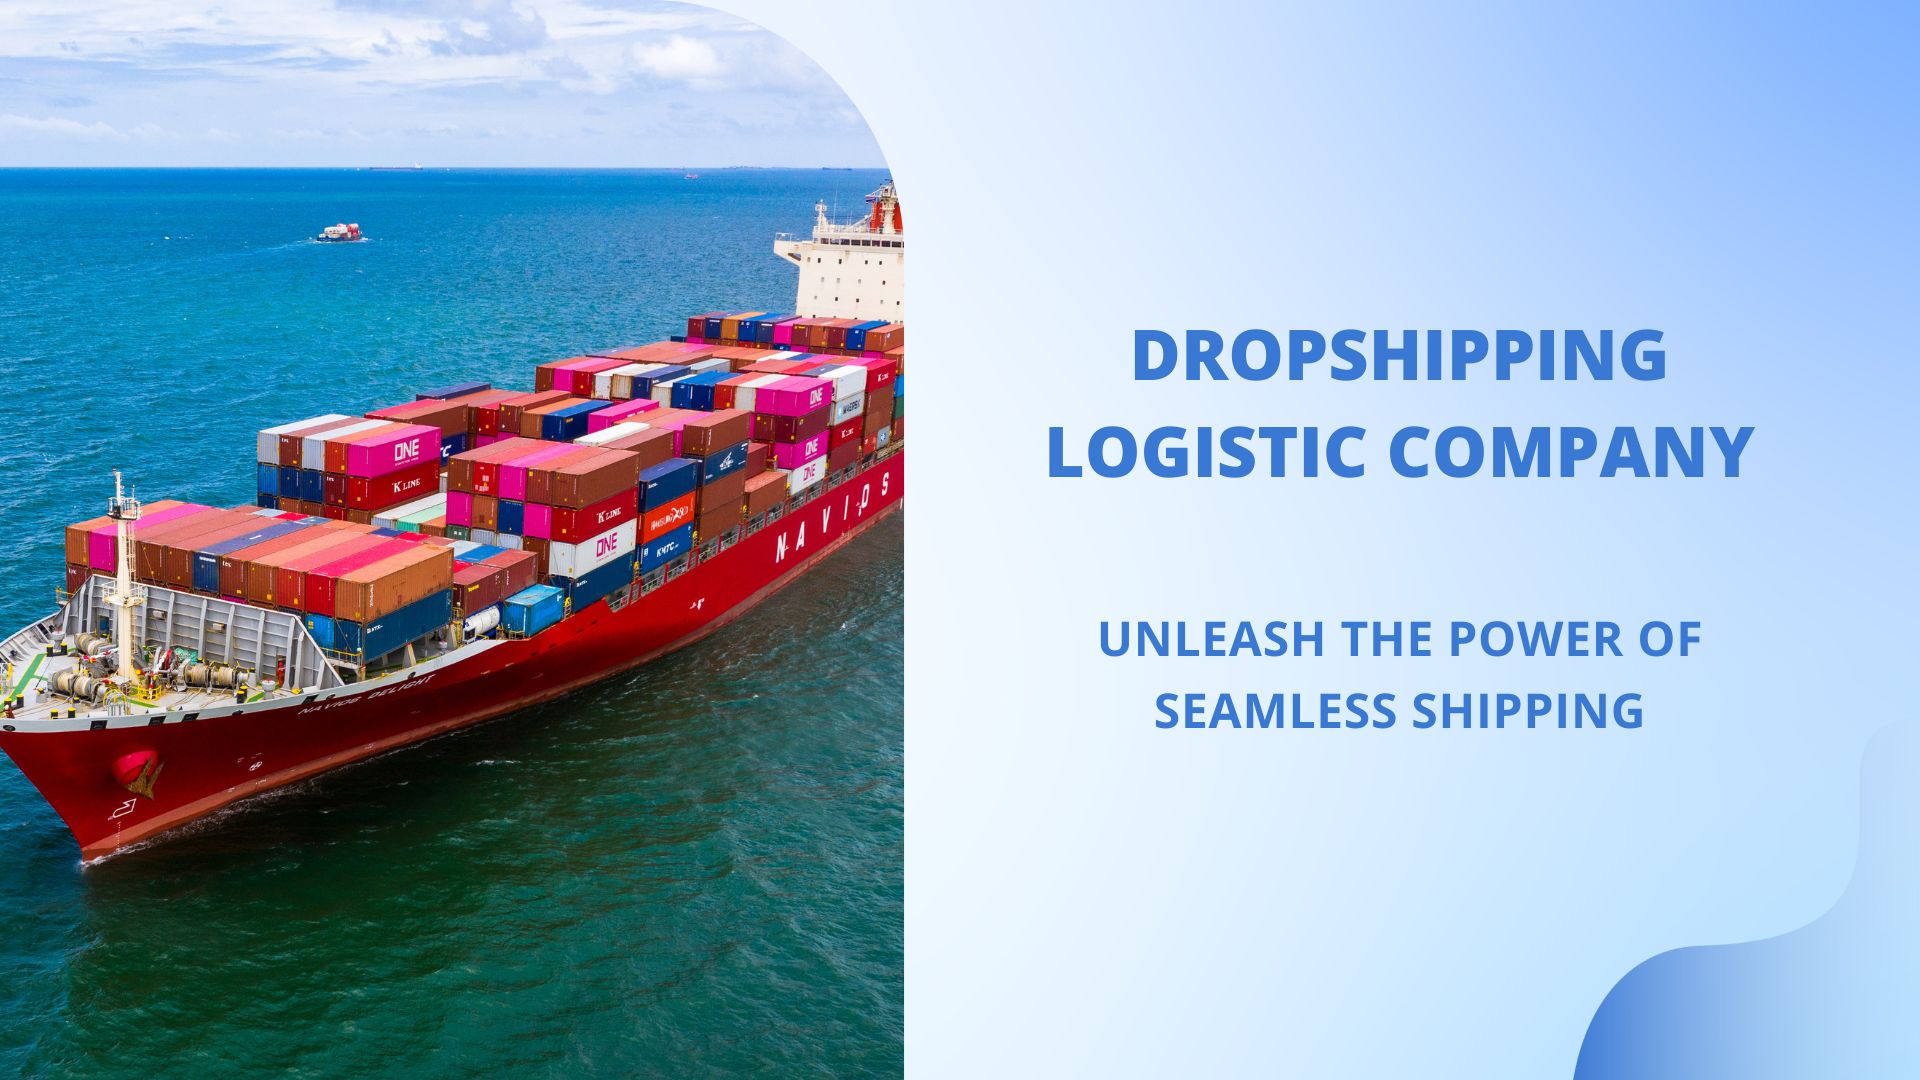 Dropshipping Logistic Company